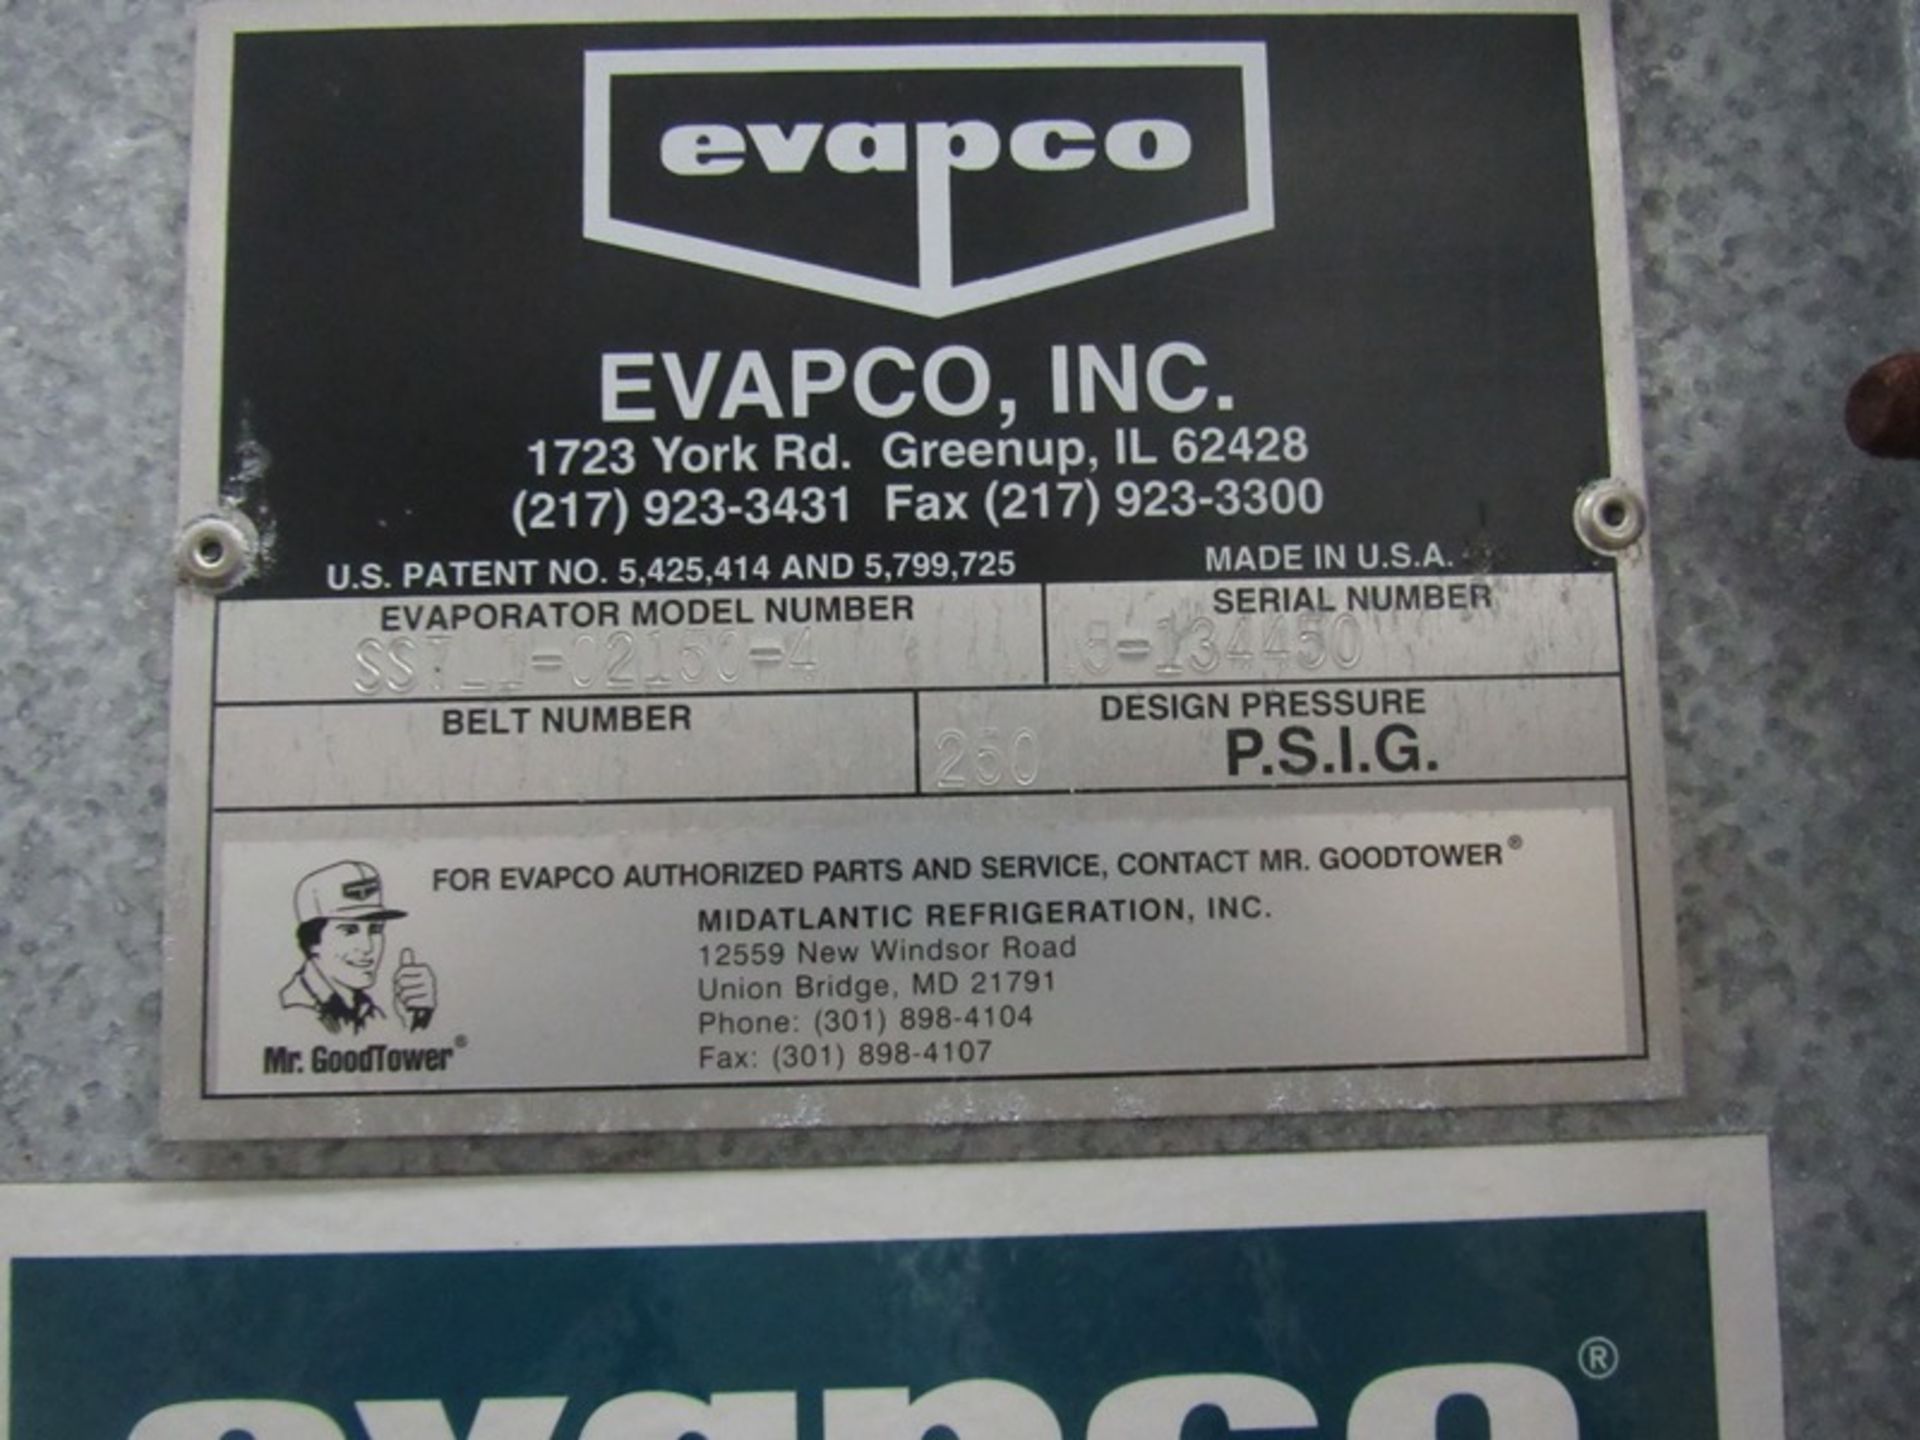 Evapco Mdl. SSTL1-02150-4 Evaporator, stainless steel single fan, ammonia coil, 48" dia. fan, 3 h.p - Image 6 of 6